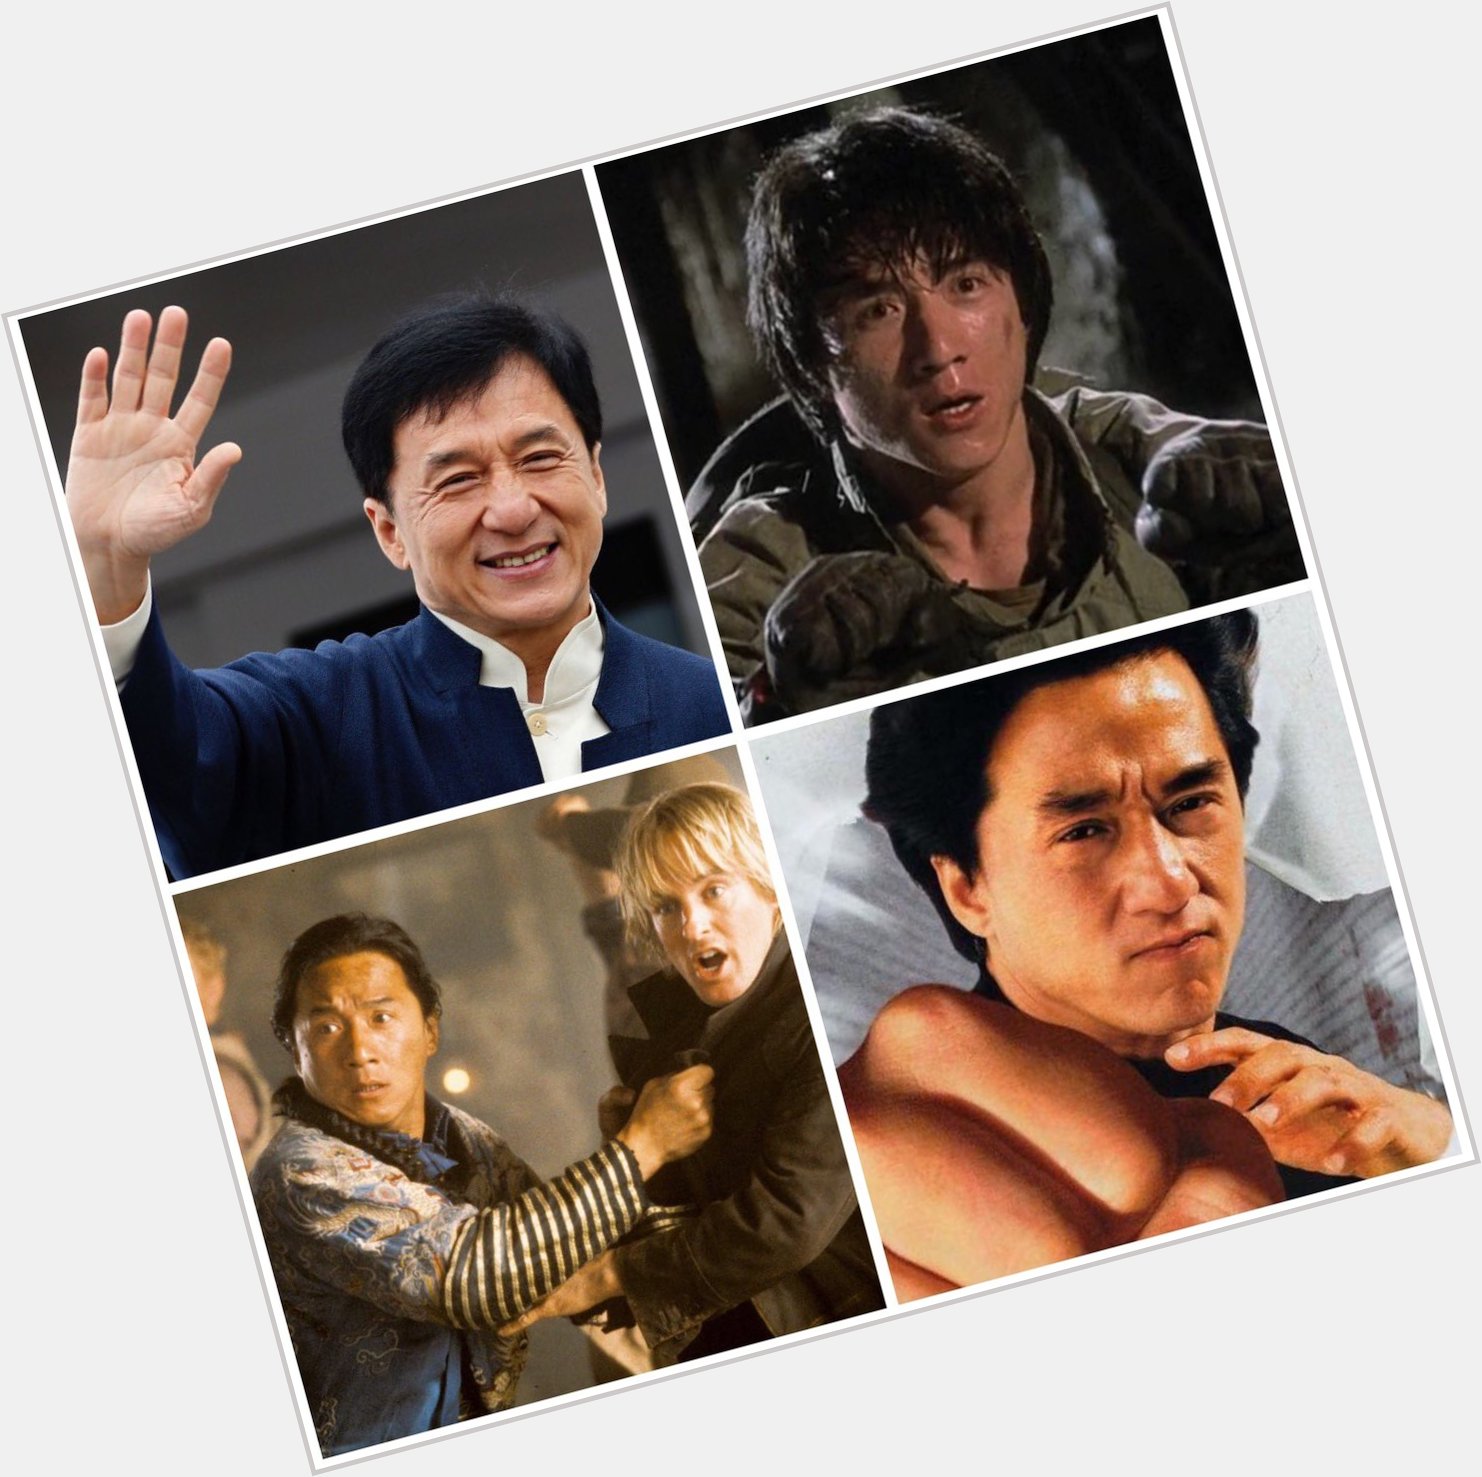 Happy birthday, Jackie Chan! 64 today.  